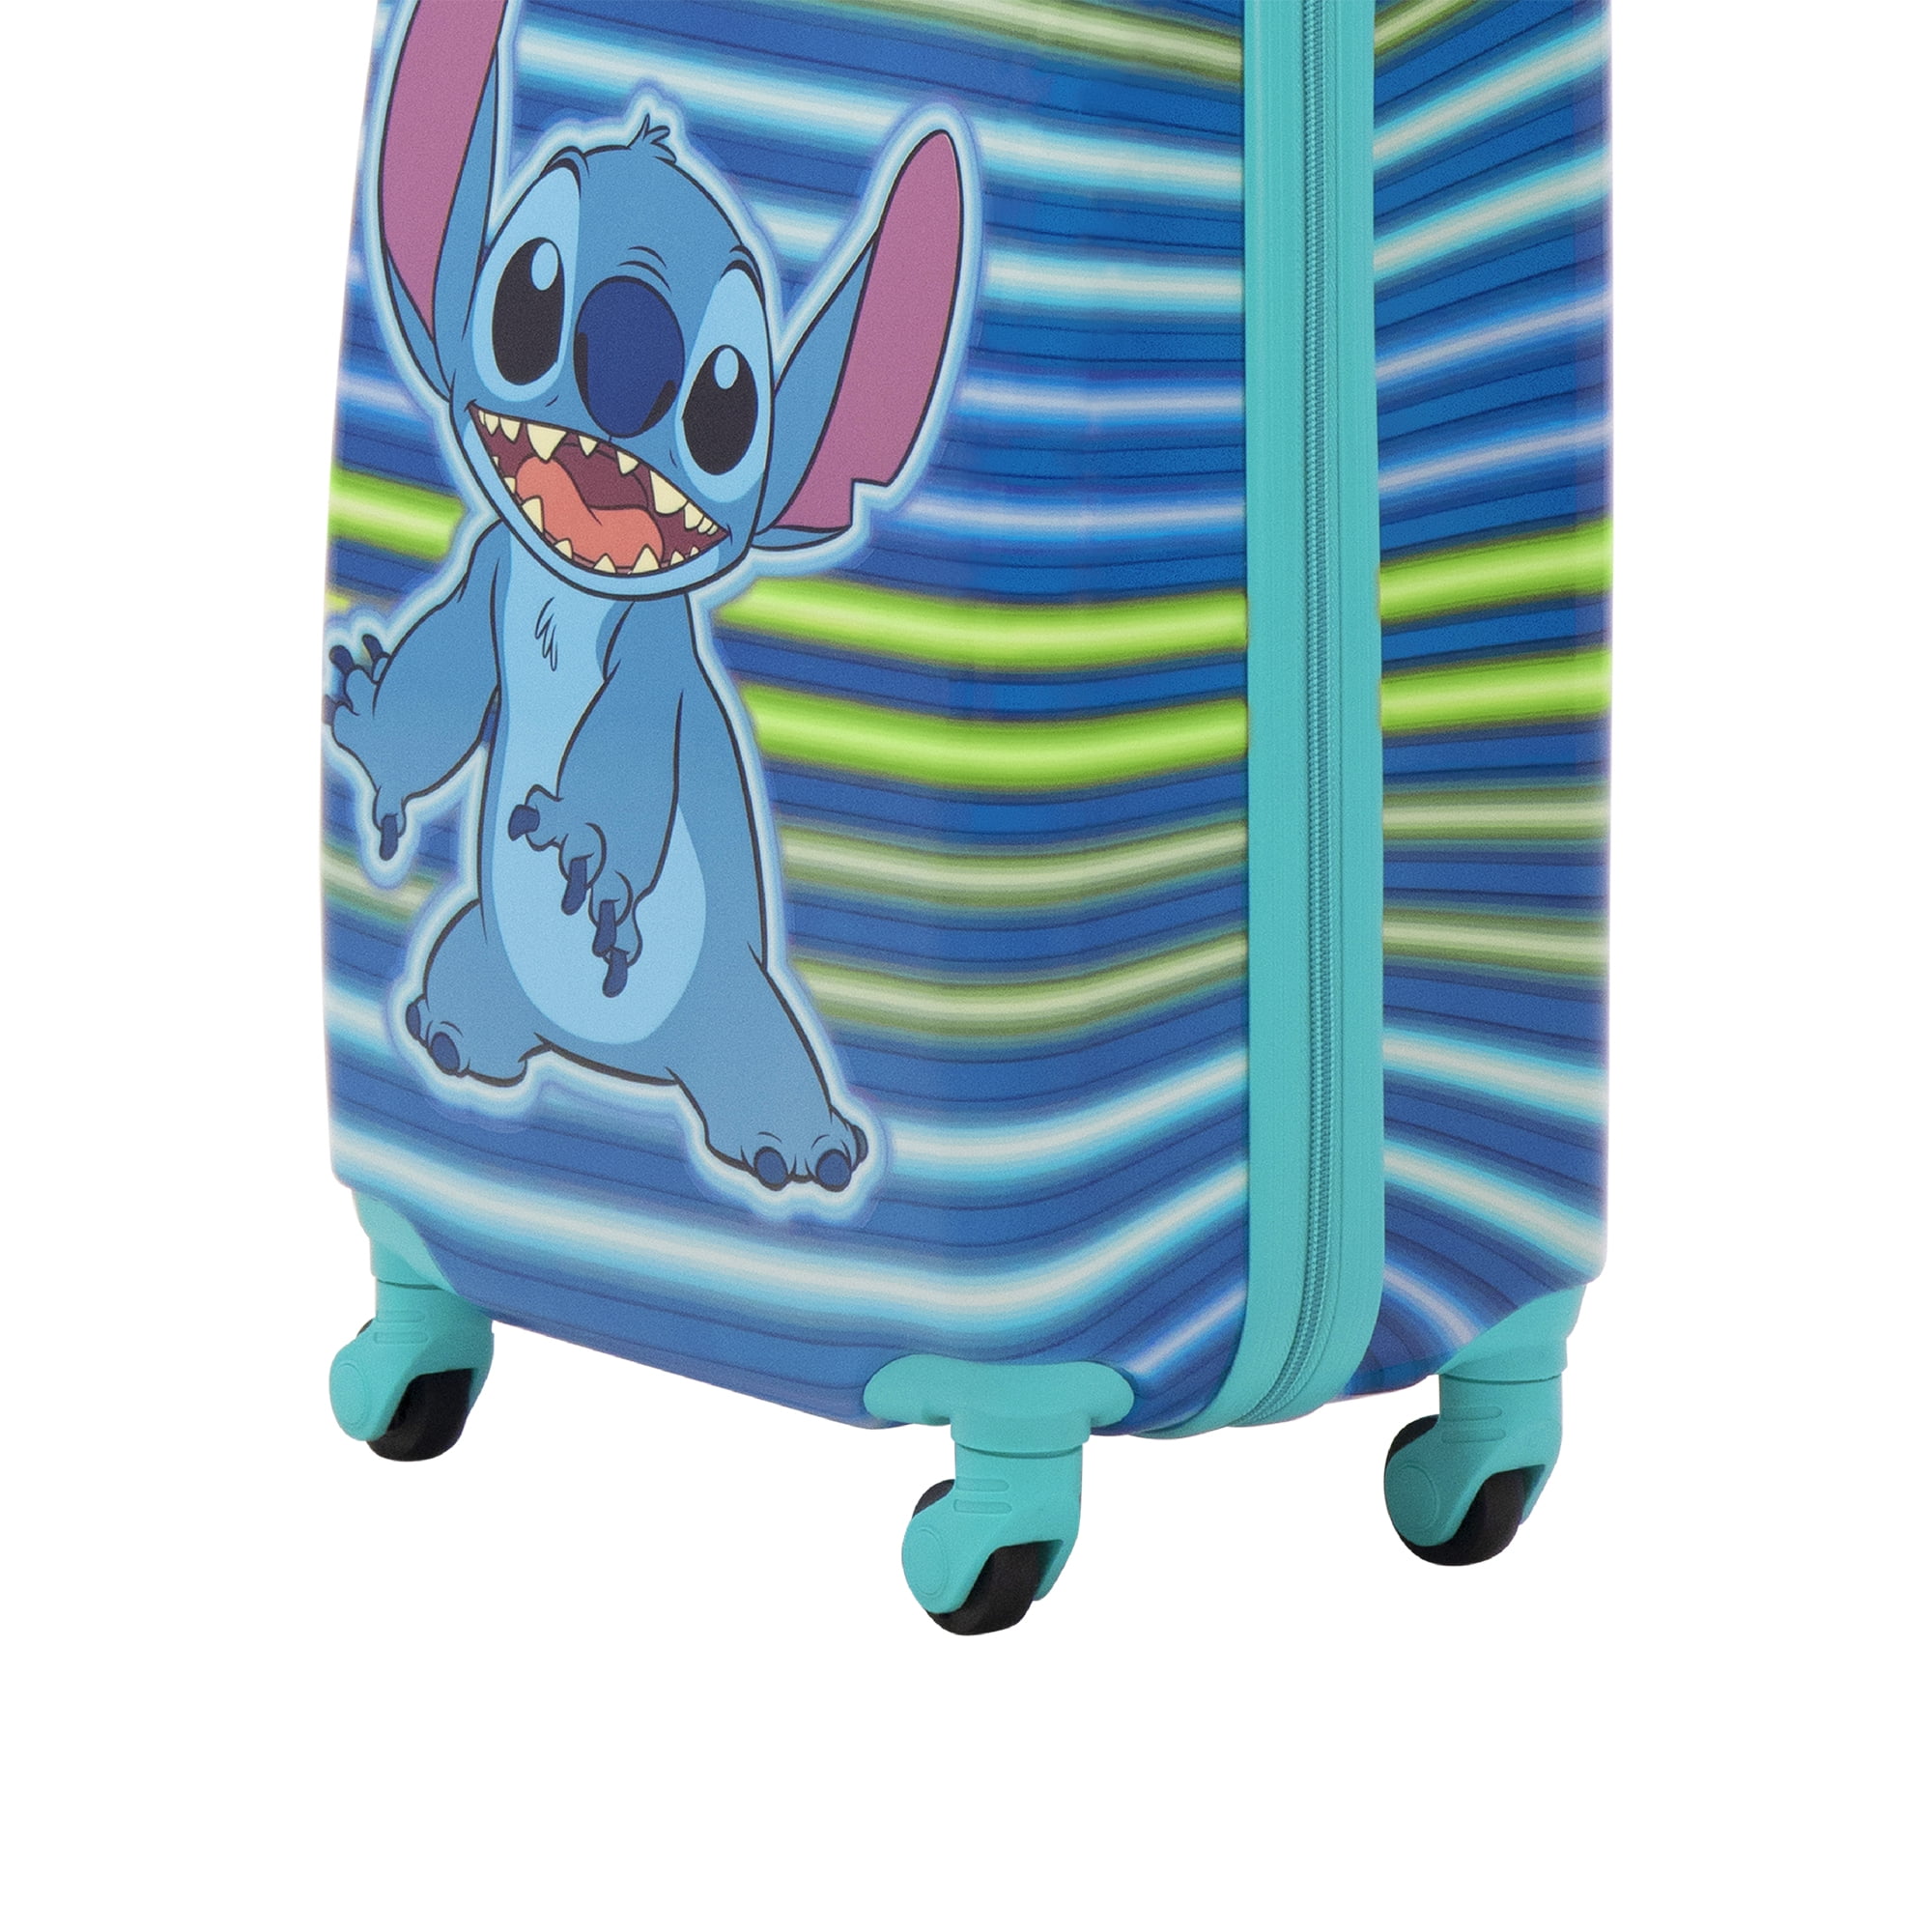 Disney Happy Stitch Trolley ABS 55 cm 4 Ruote JOUMMA BAGS - 4041141